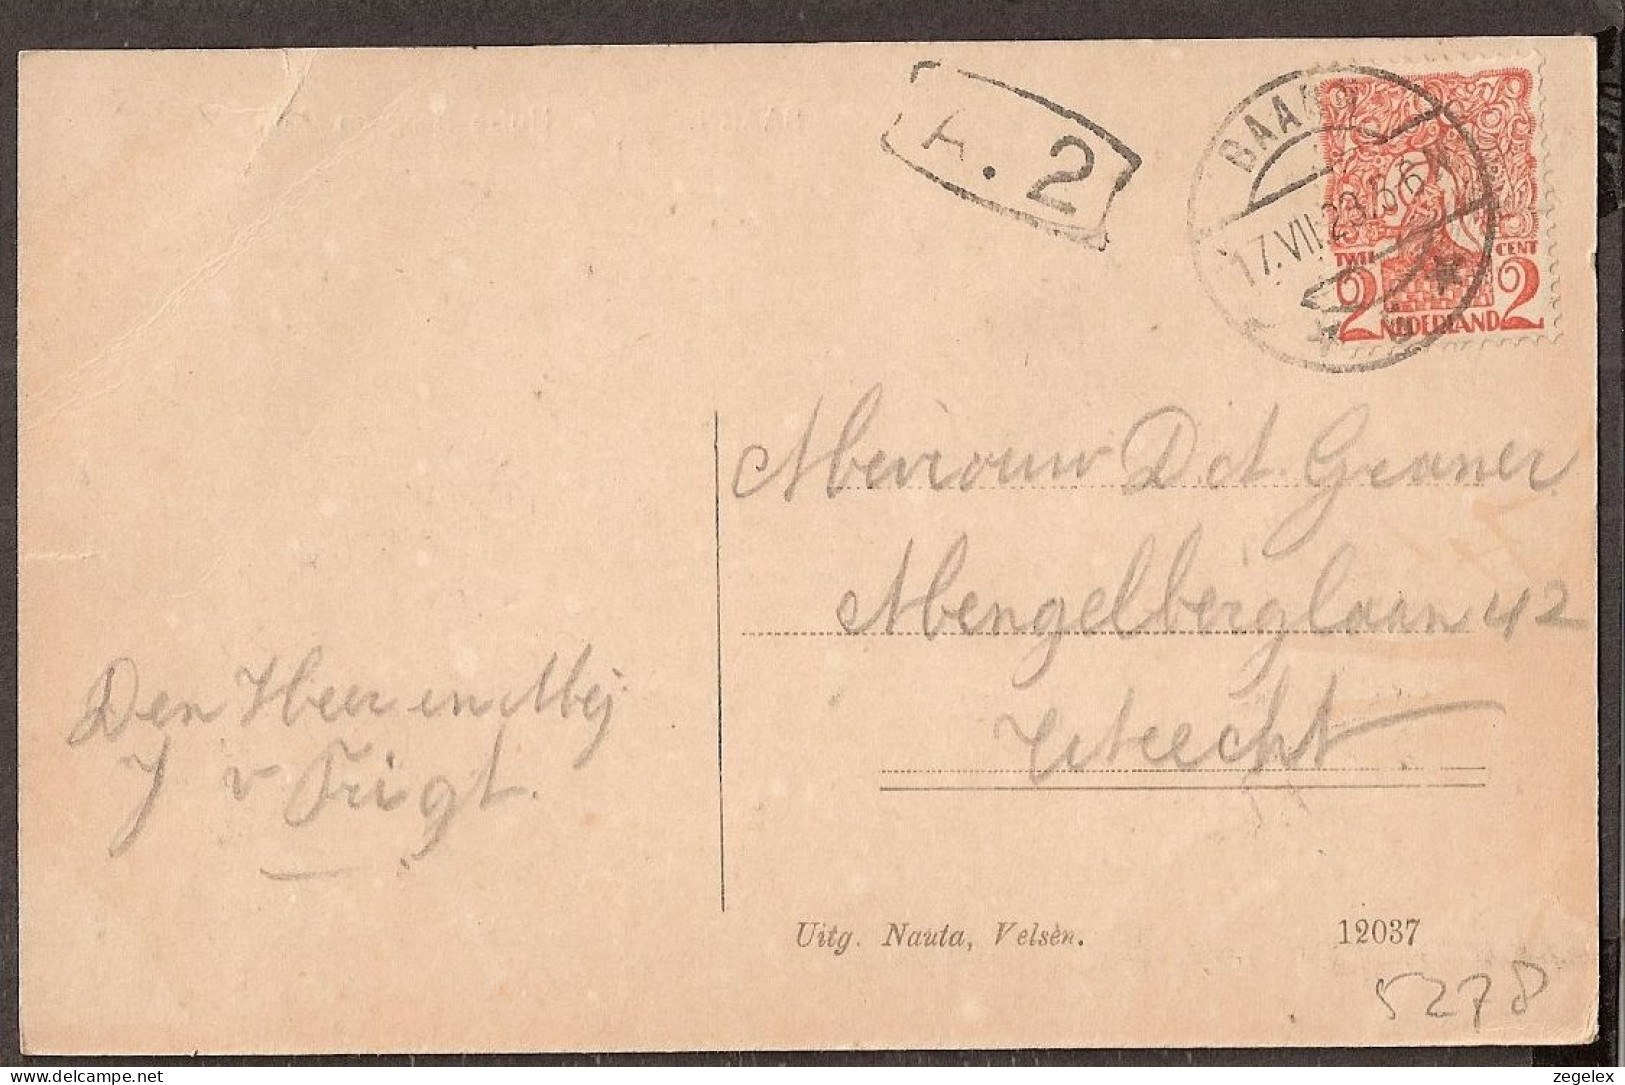 Baarn - Huize Berg En Dal  - 1923 - Baarn